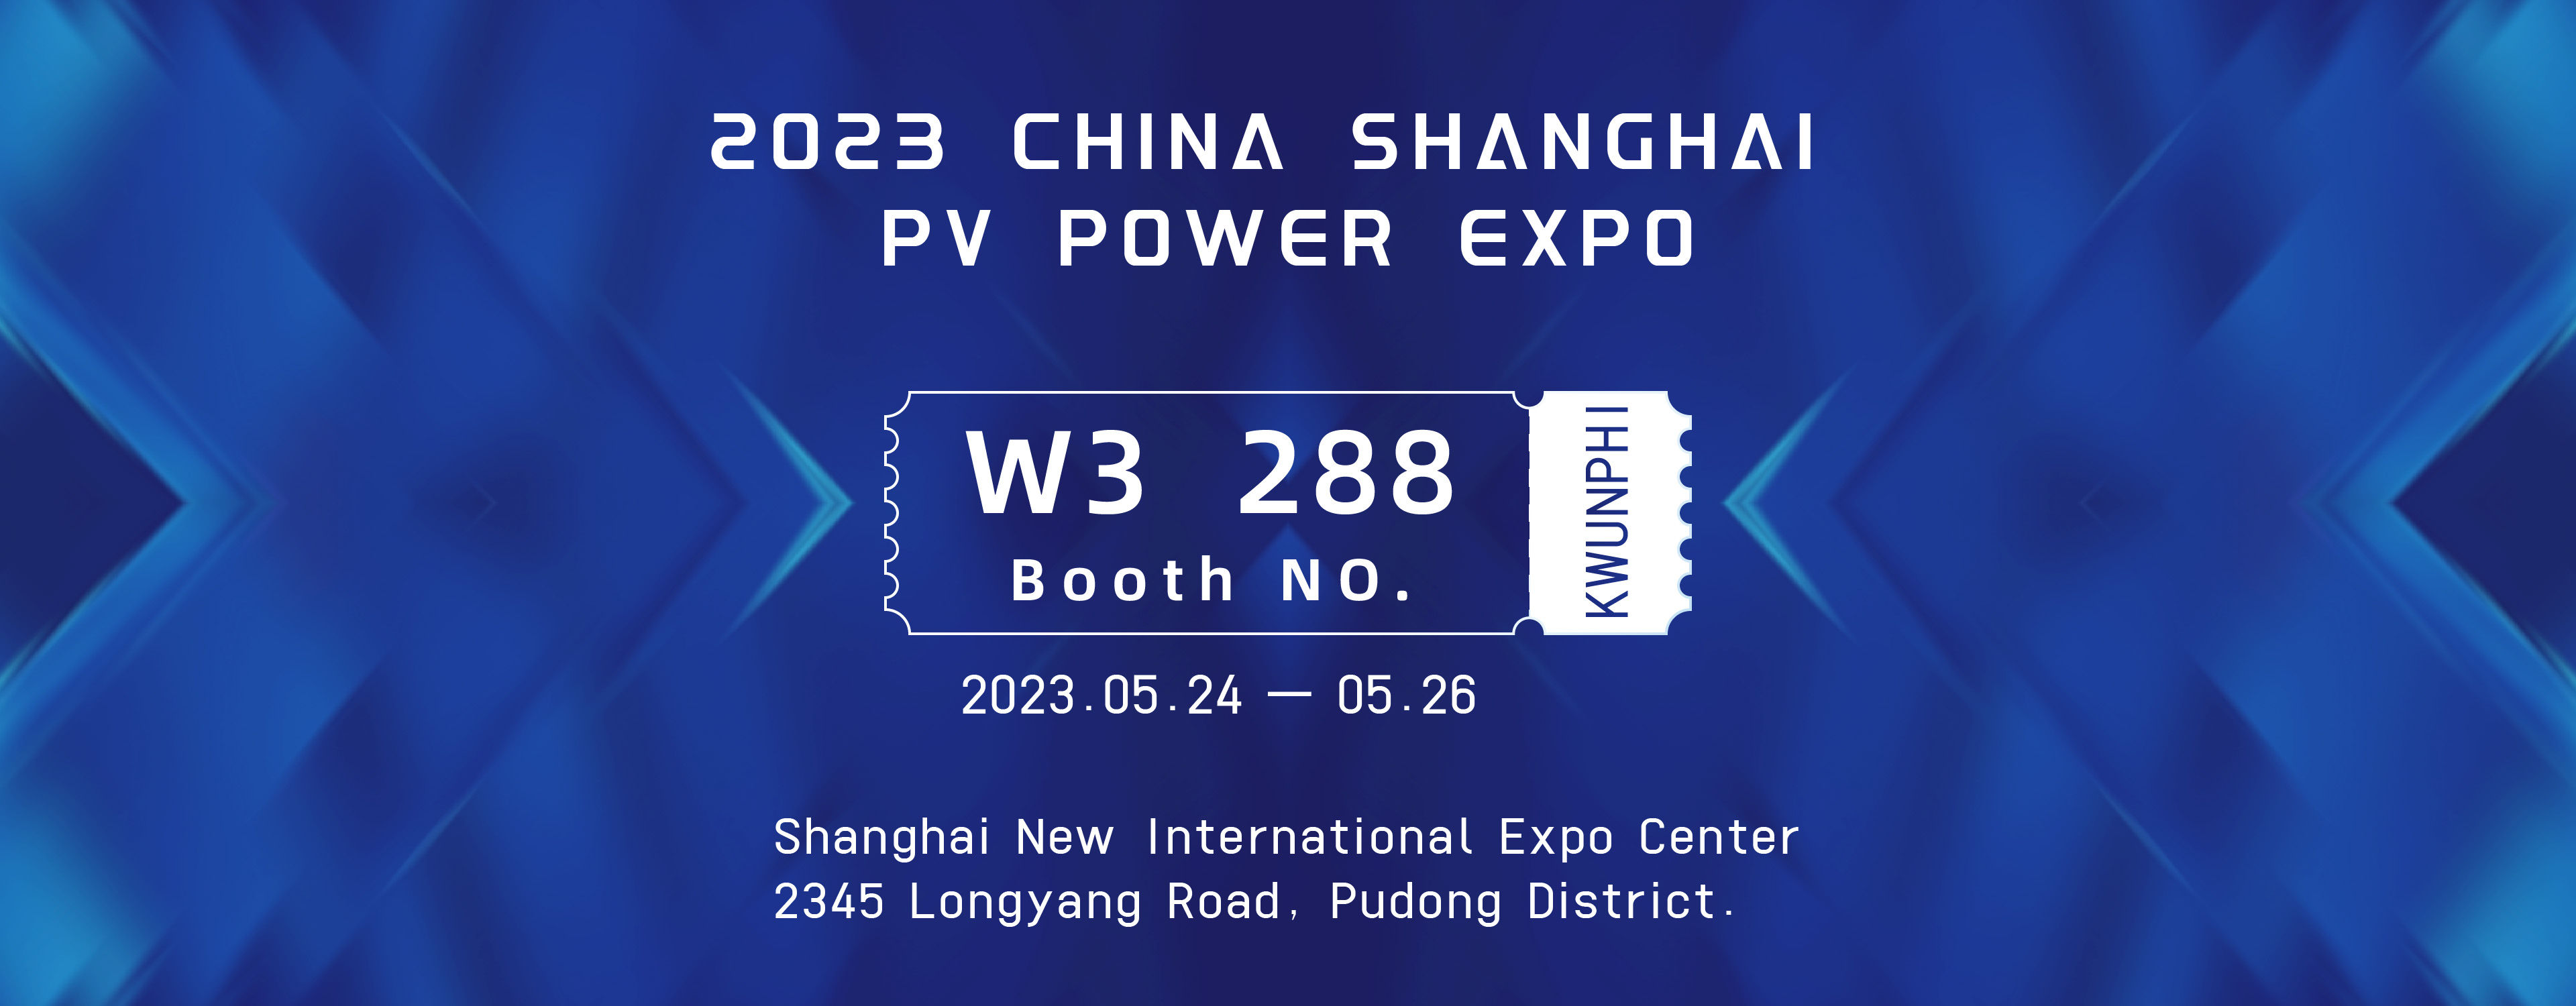 2023 China Shanghai PV Power EXPO